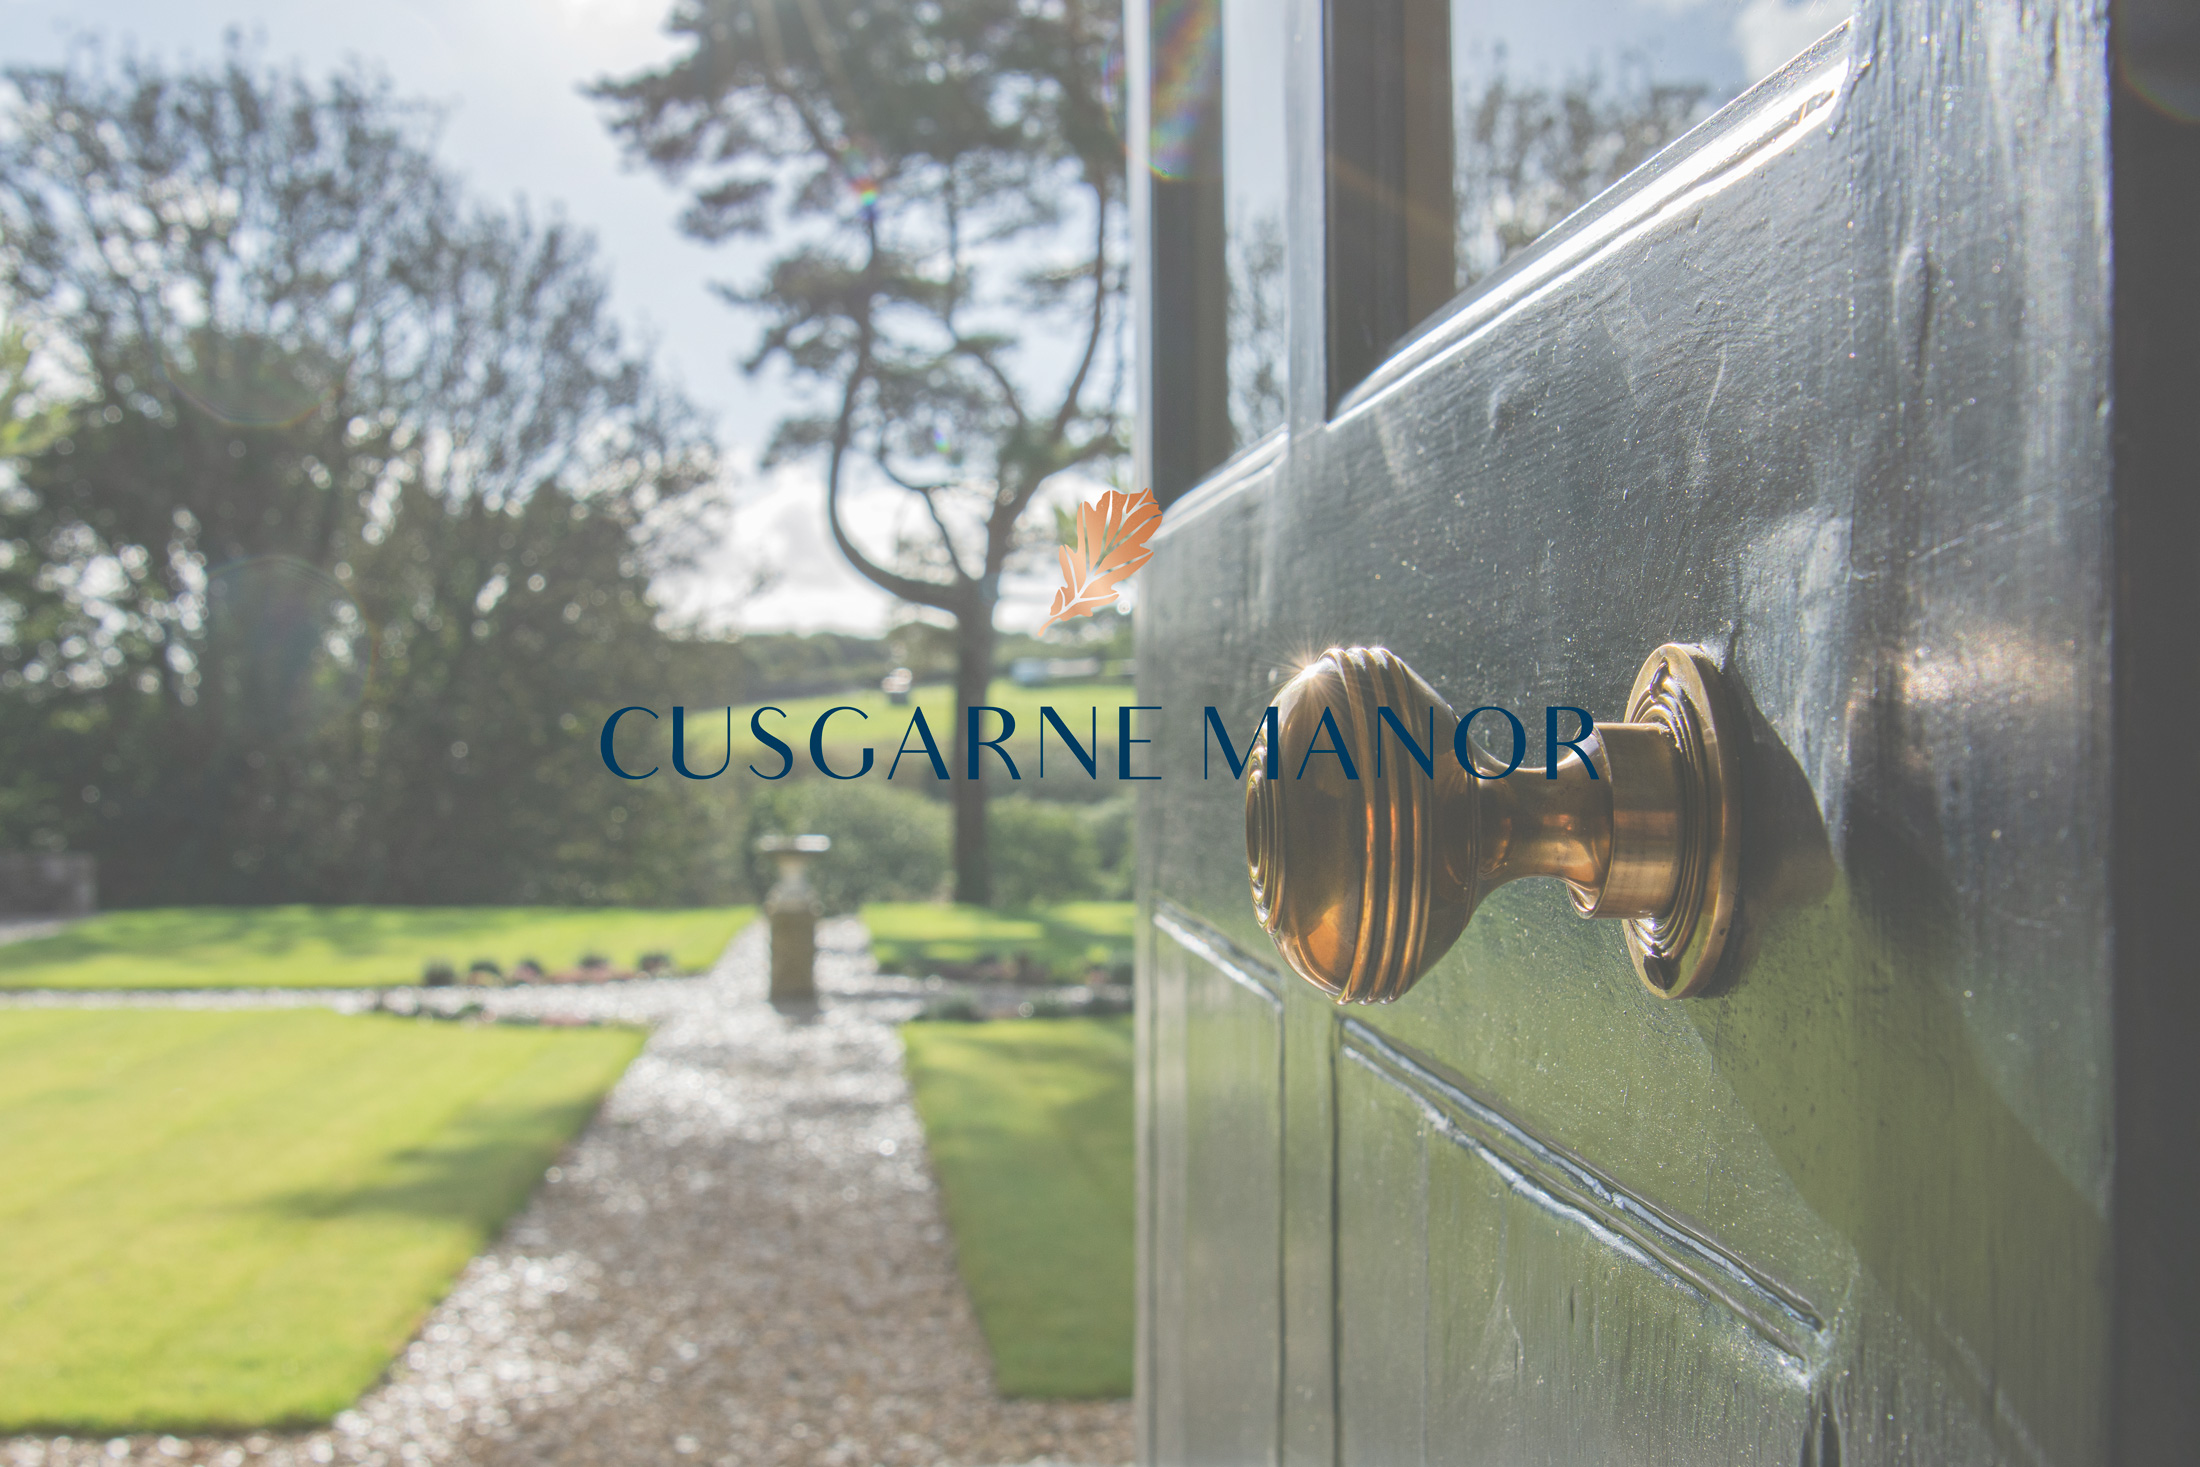 Cusgarne Manor portfolio entry banner image